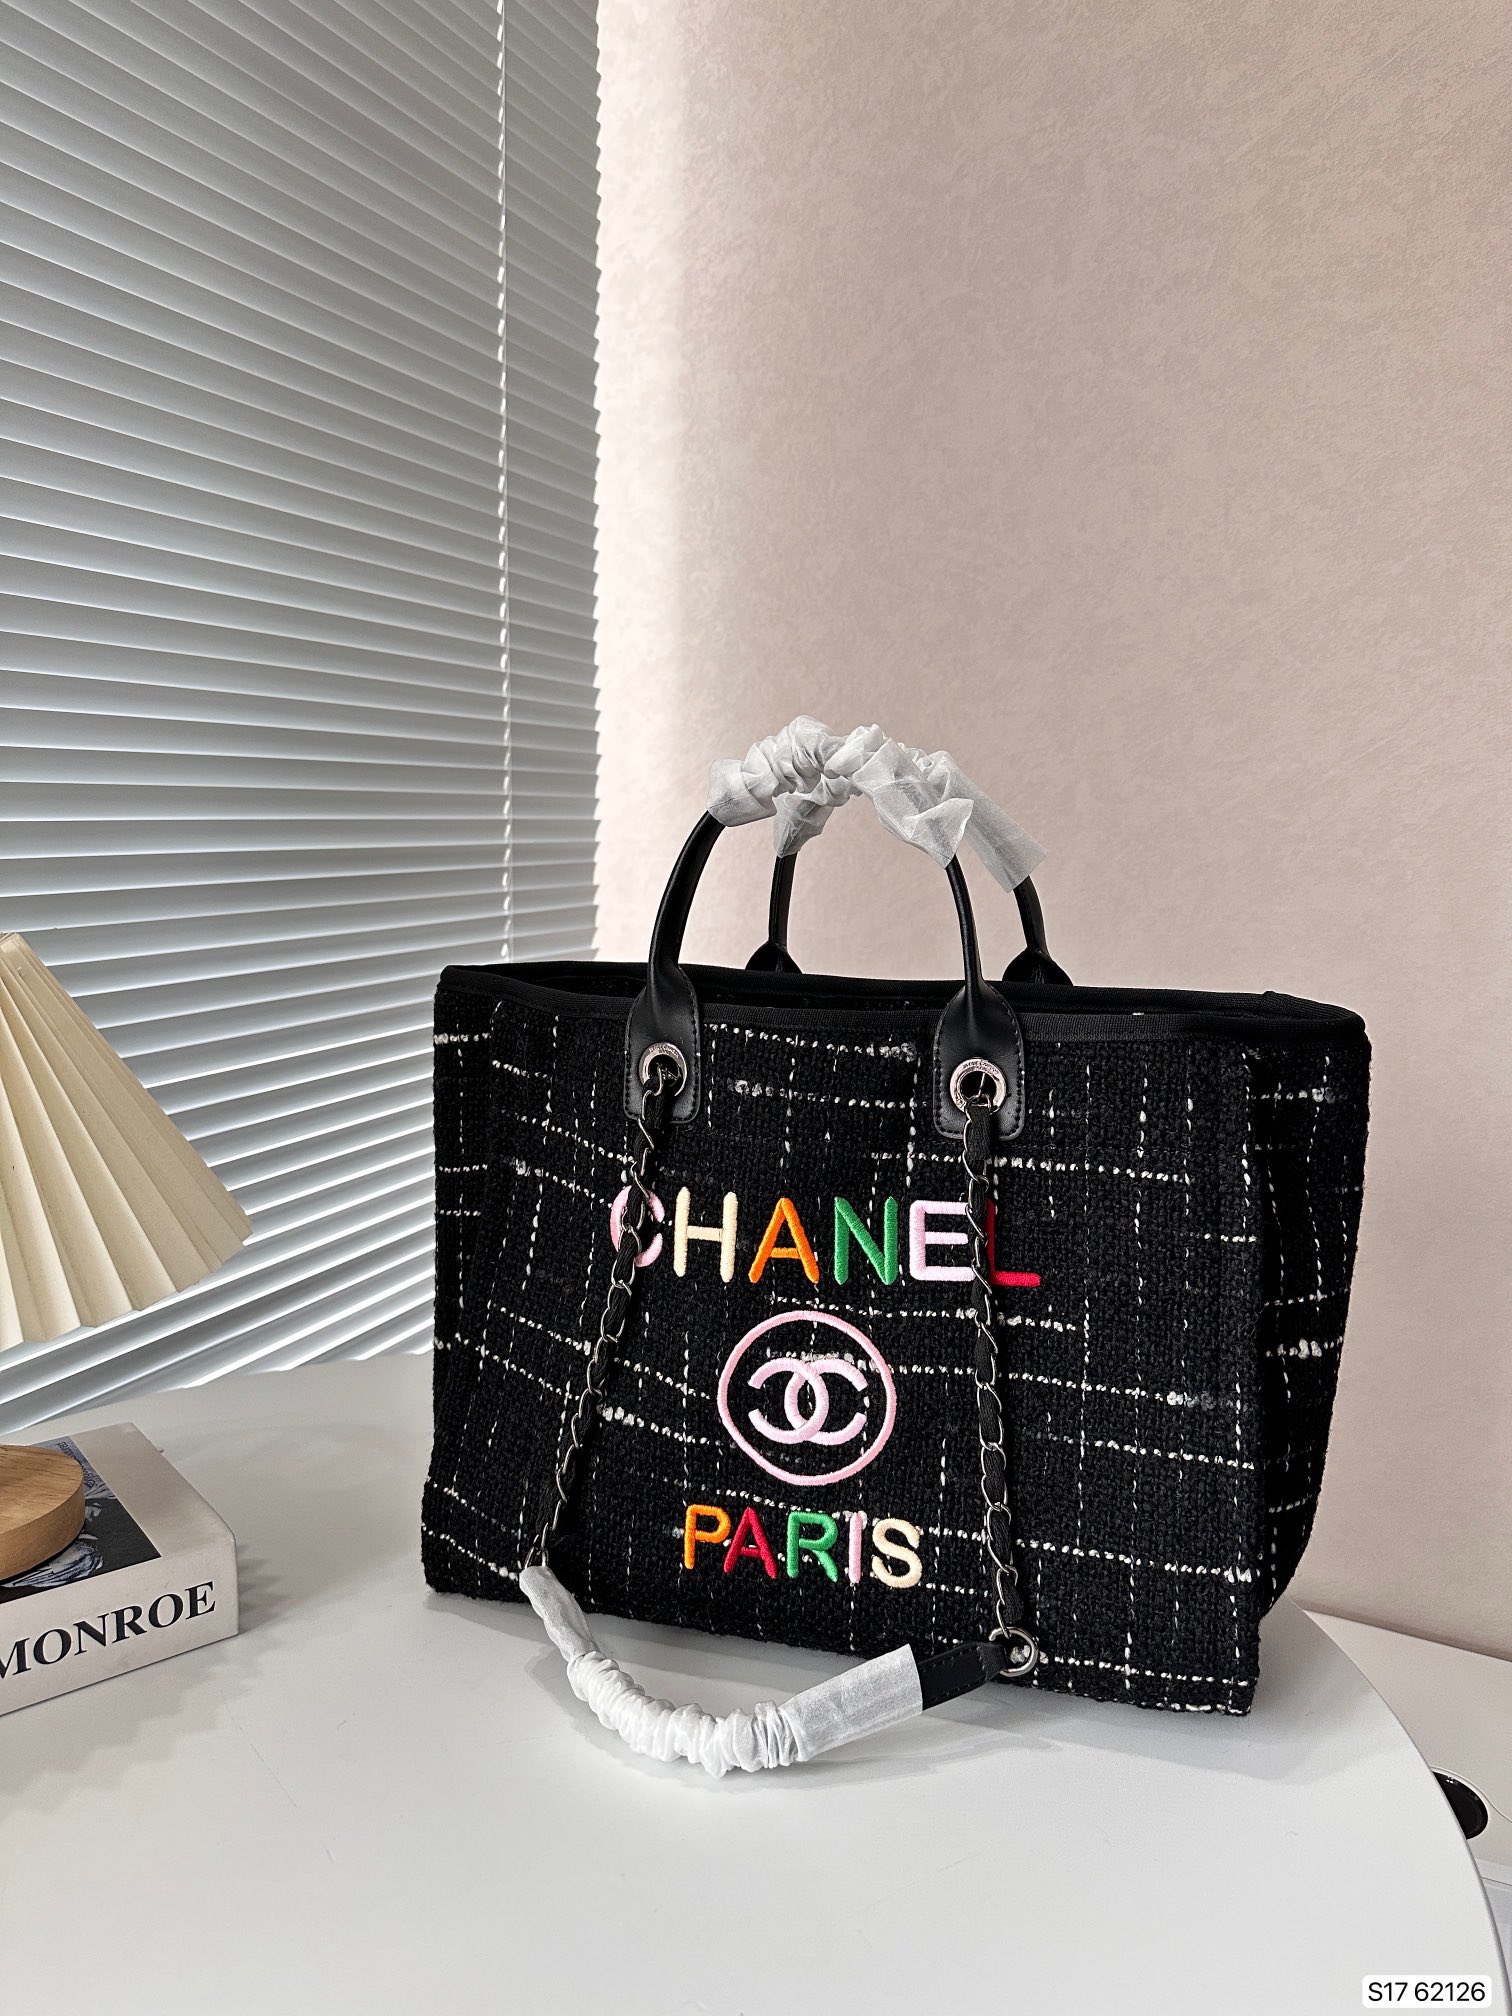 Chanel Handbags Tote Bags Beach